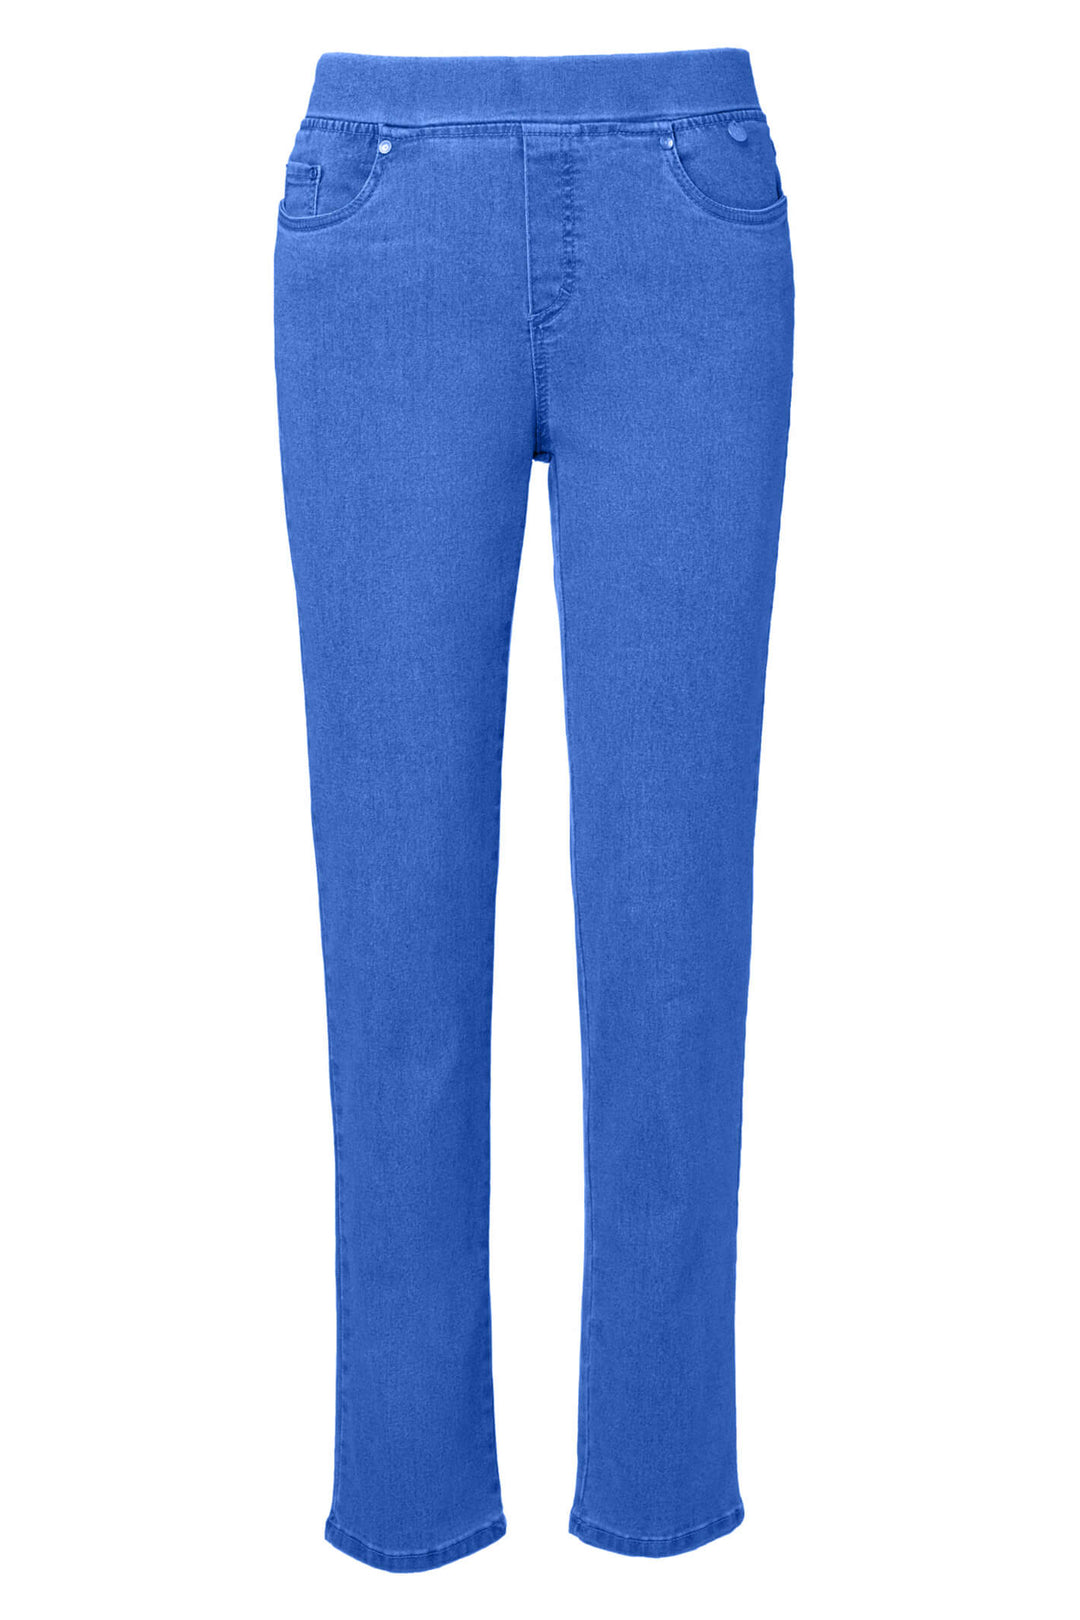 Anna Montana Angelika 1001 129 Karibik Blue Pull-On Jeans - Shirley Allum Boutique